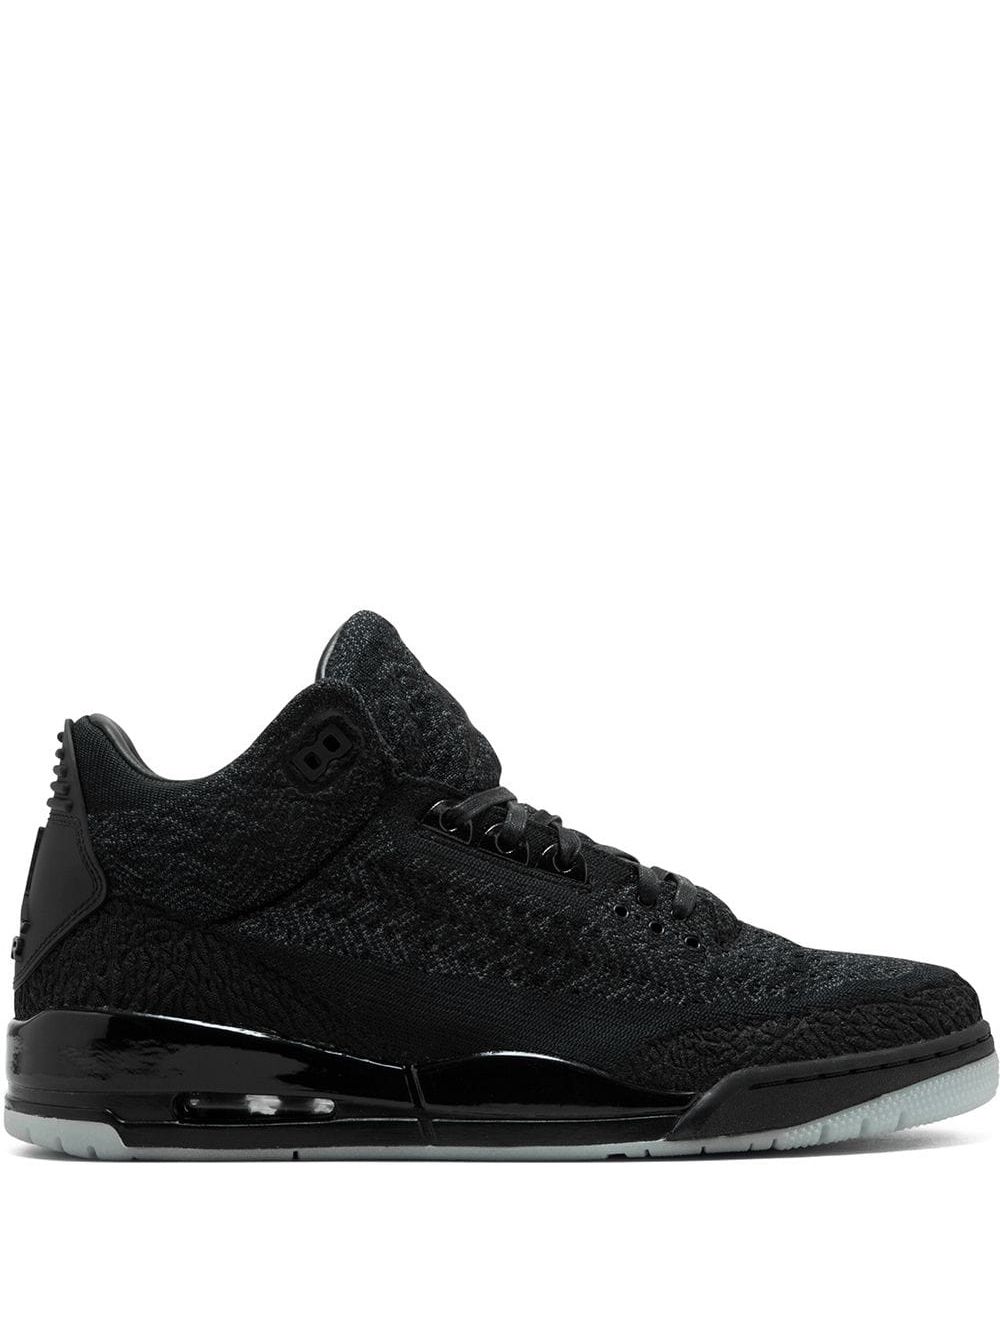 Jordan Air Jordan 3 Retro Flyknit sneakers - Black